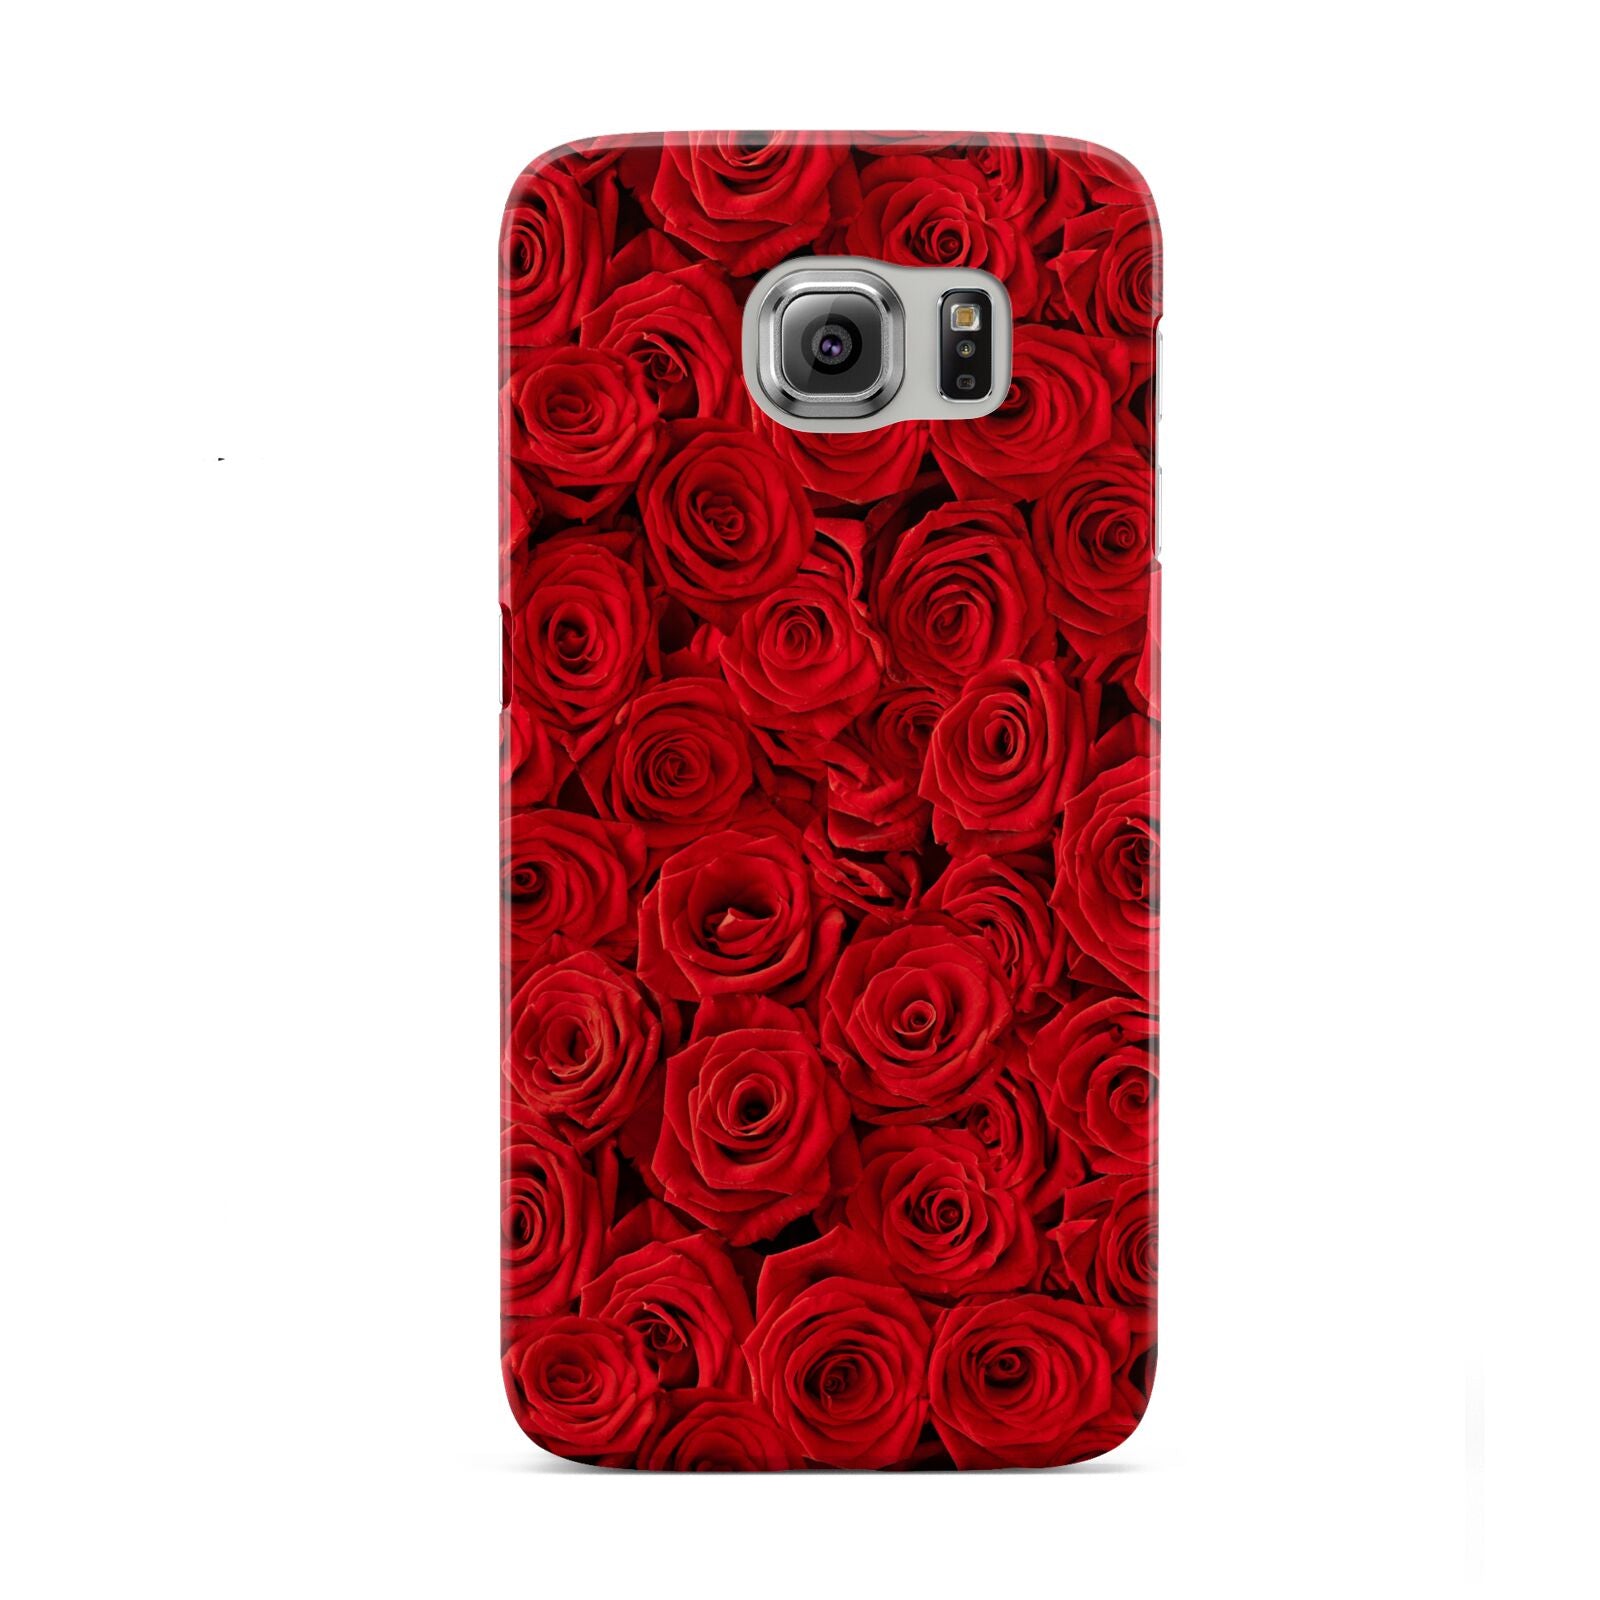 Red Rose Samsung Galaxy S6 Case